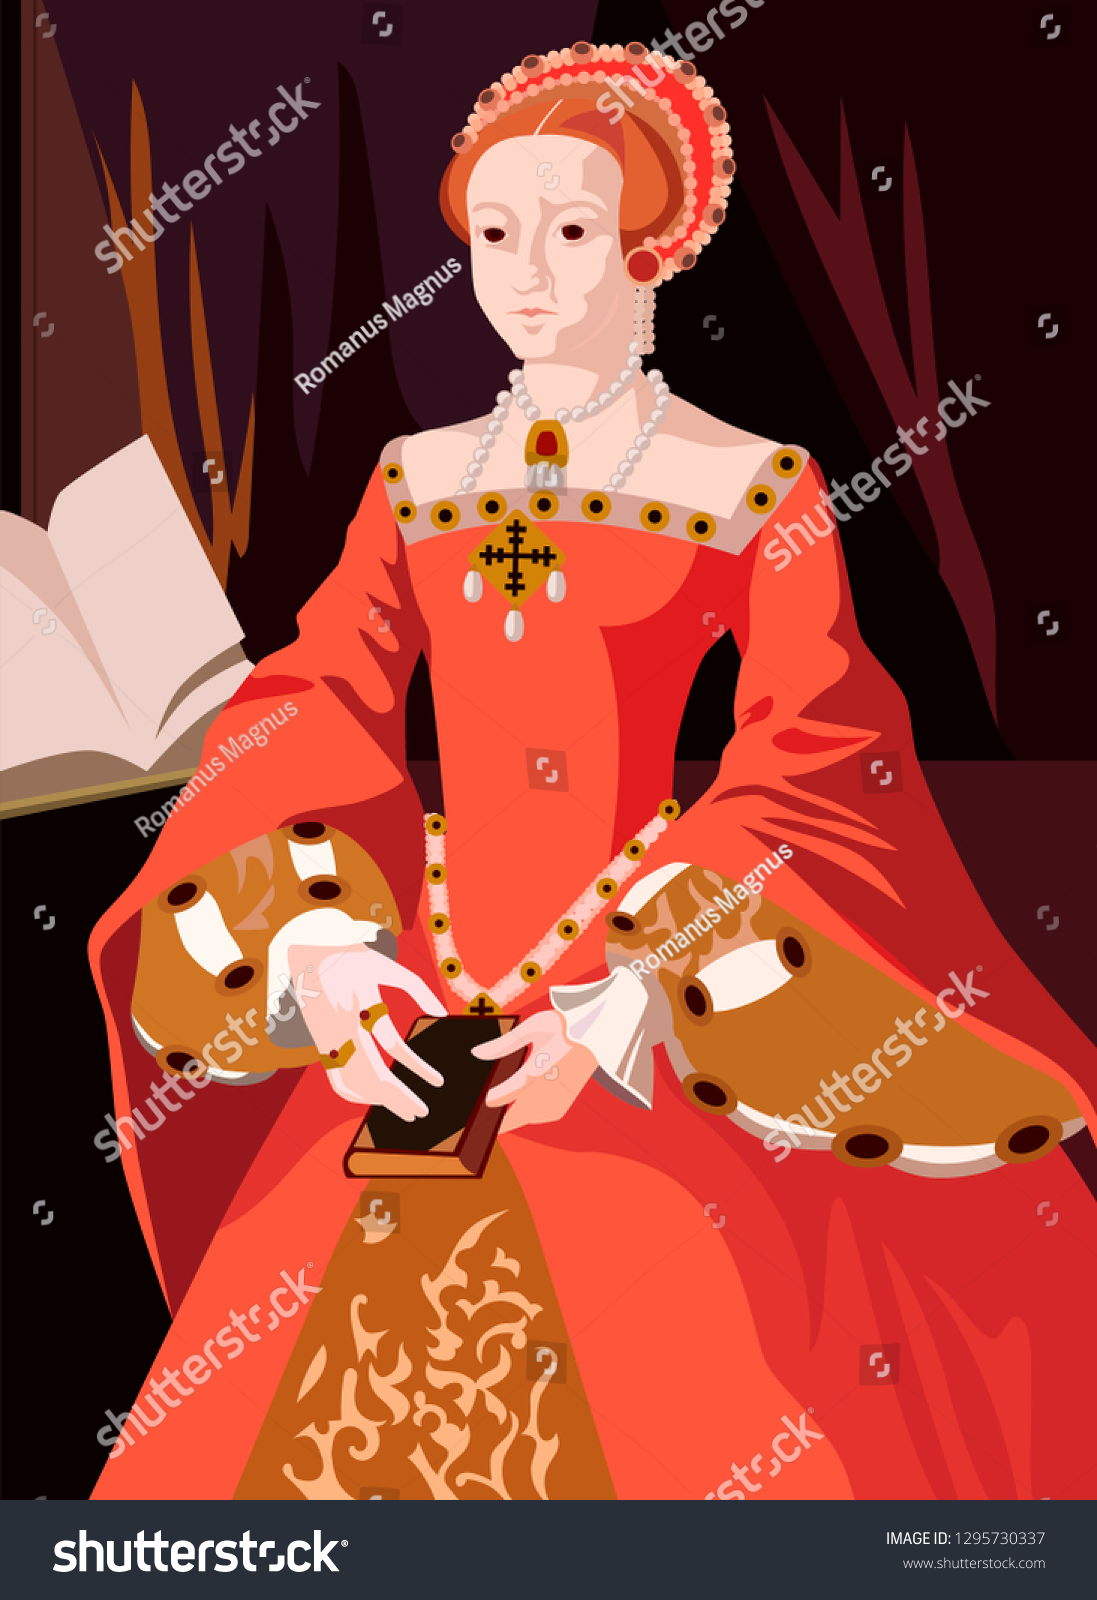 Countess elizabeth bathory